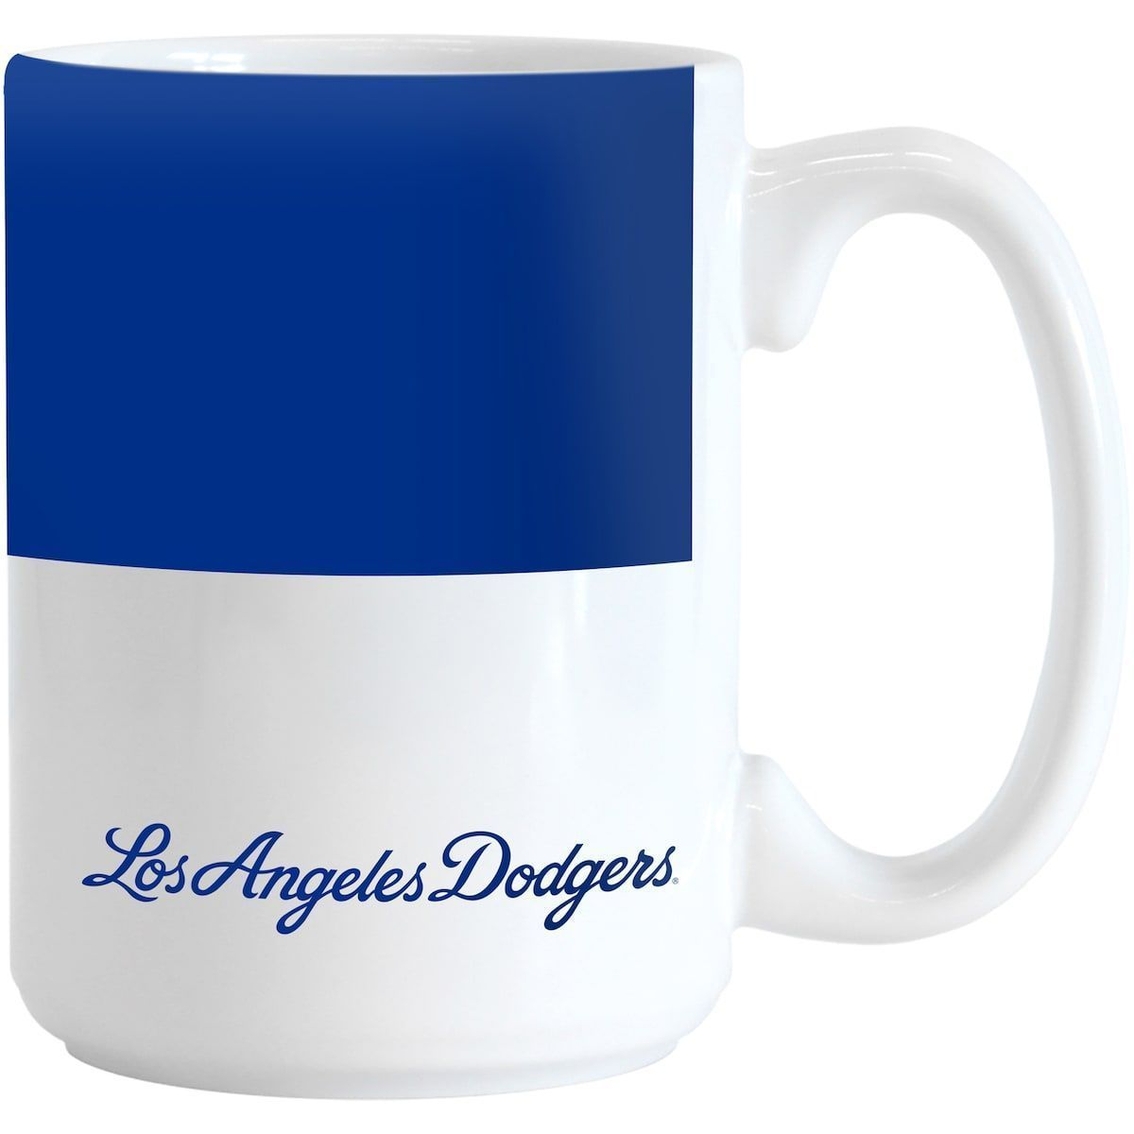 Los Angeles Dodgers 15oz. Colorblock Mug - Image 3 of 3